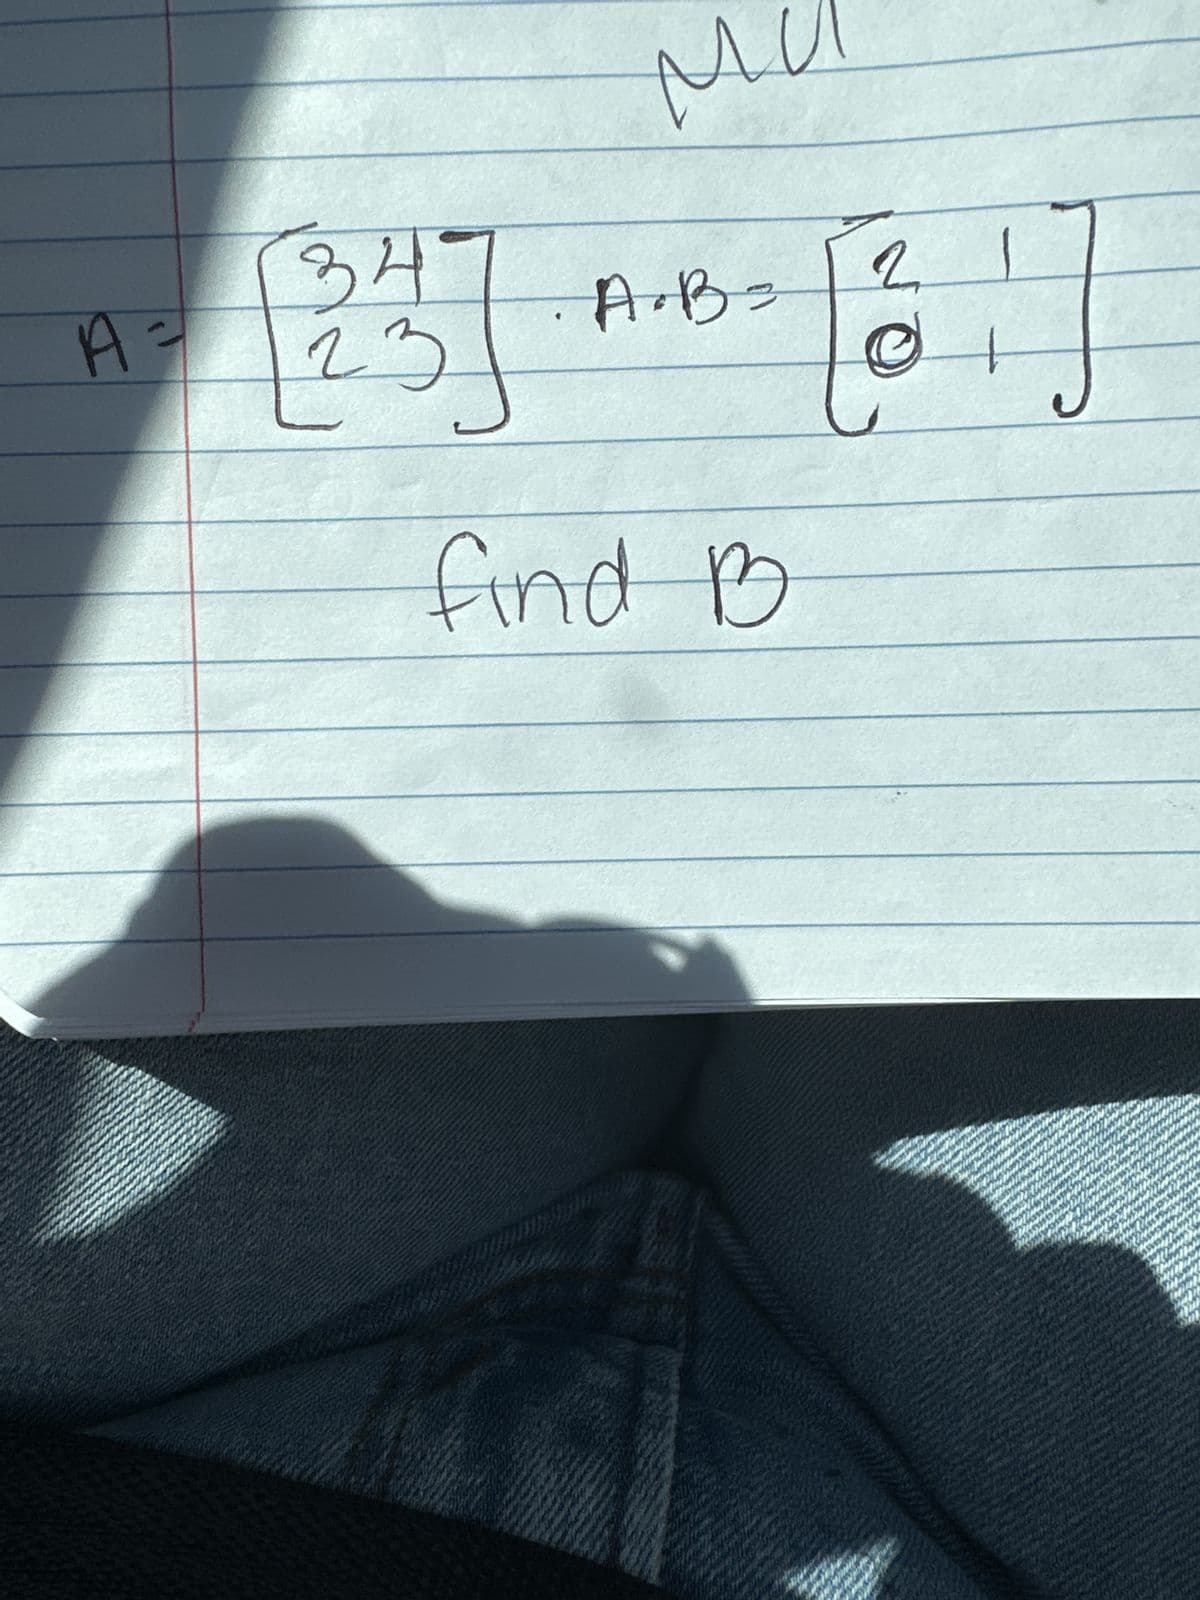 A
347
23
MC
A.B=
find B
19
2
ㅇ
www
duce